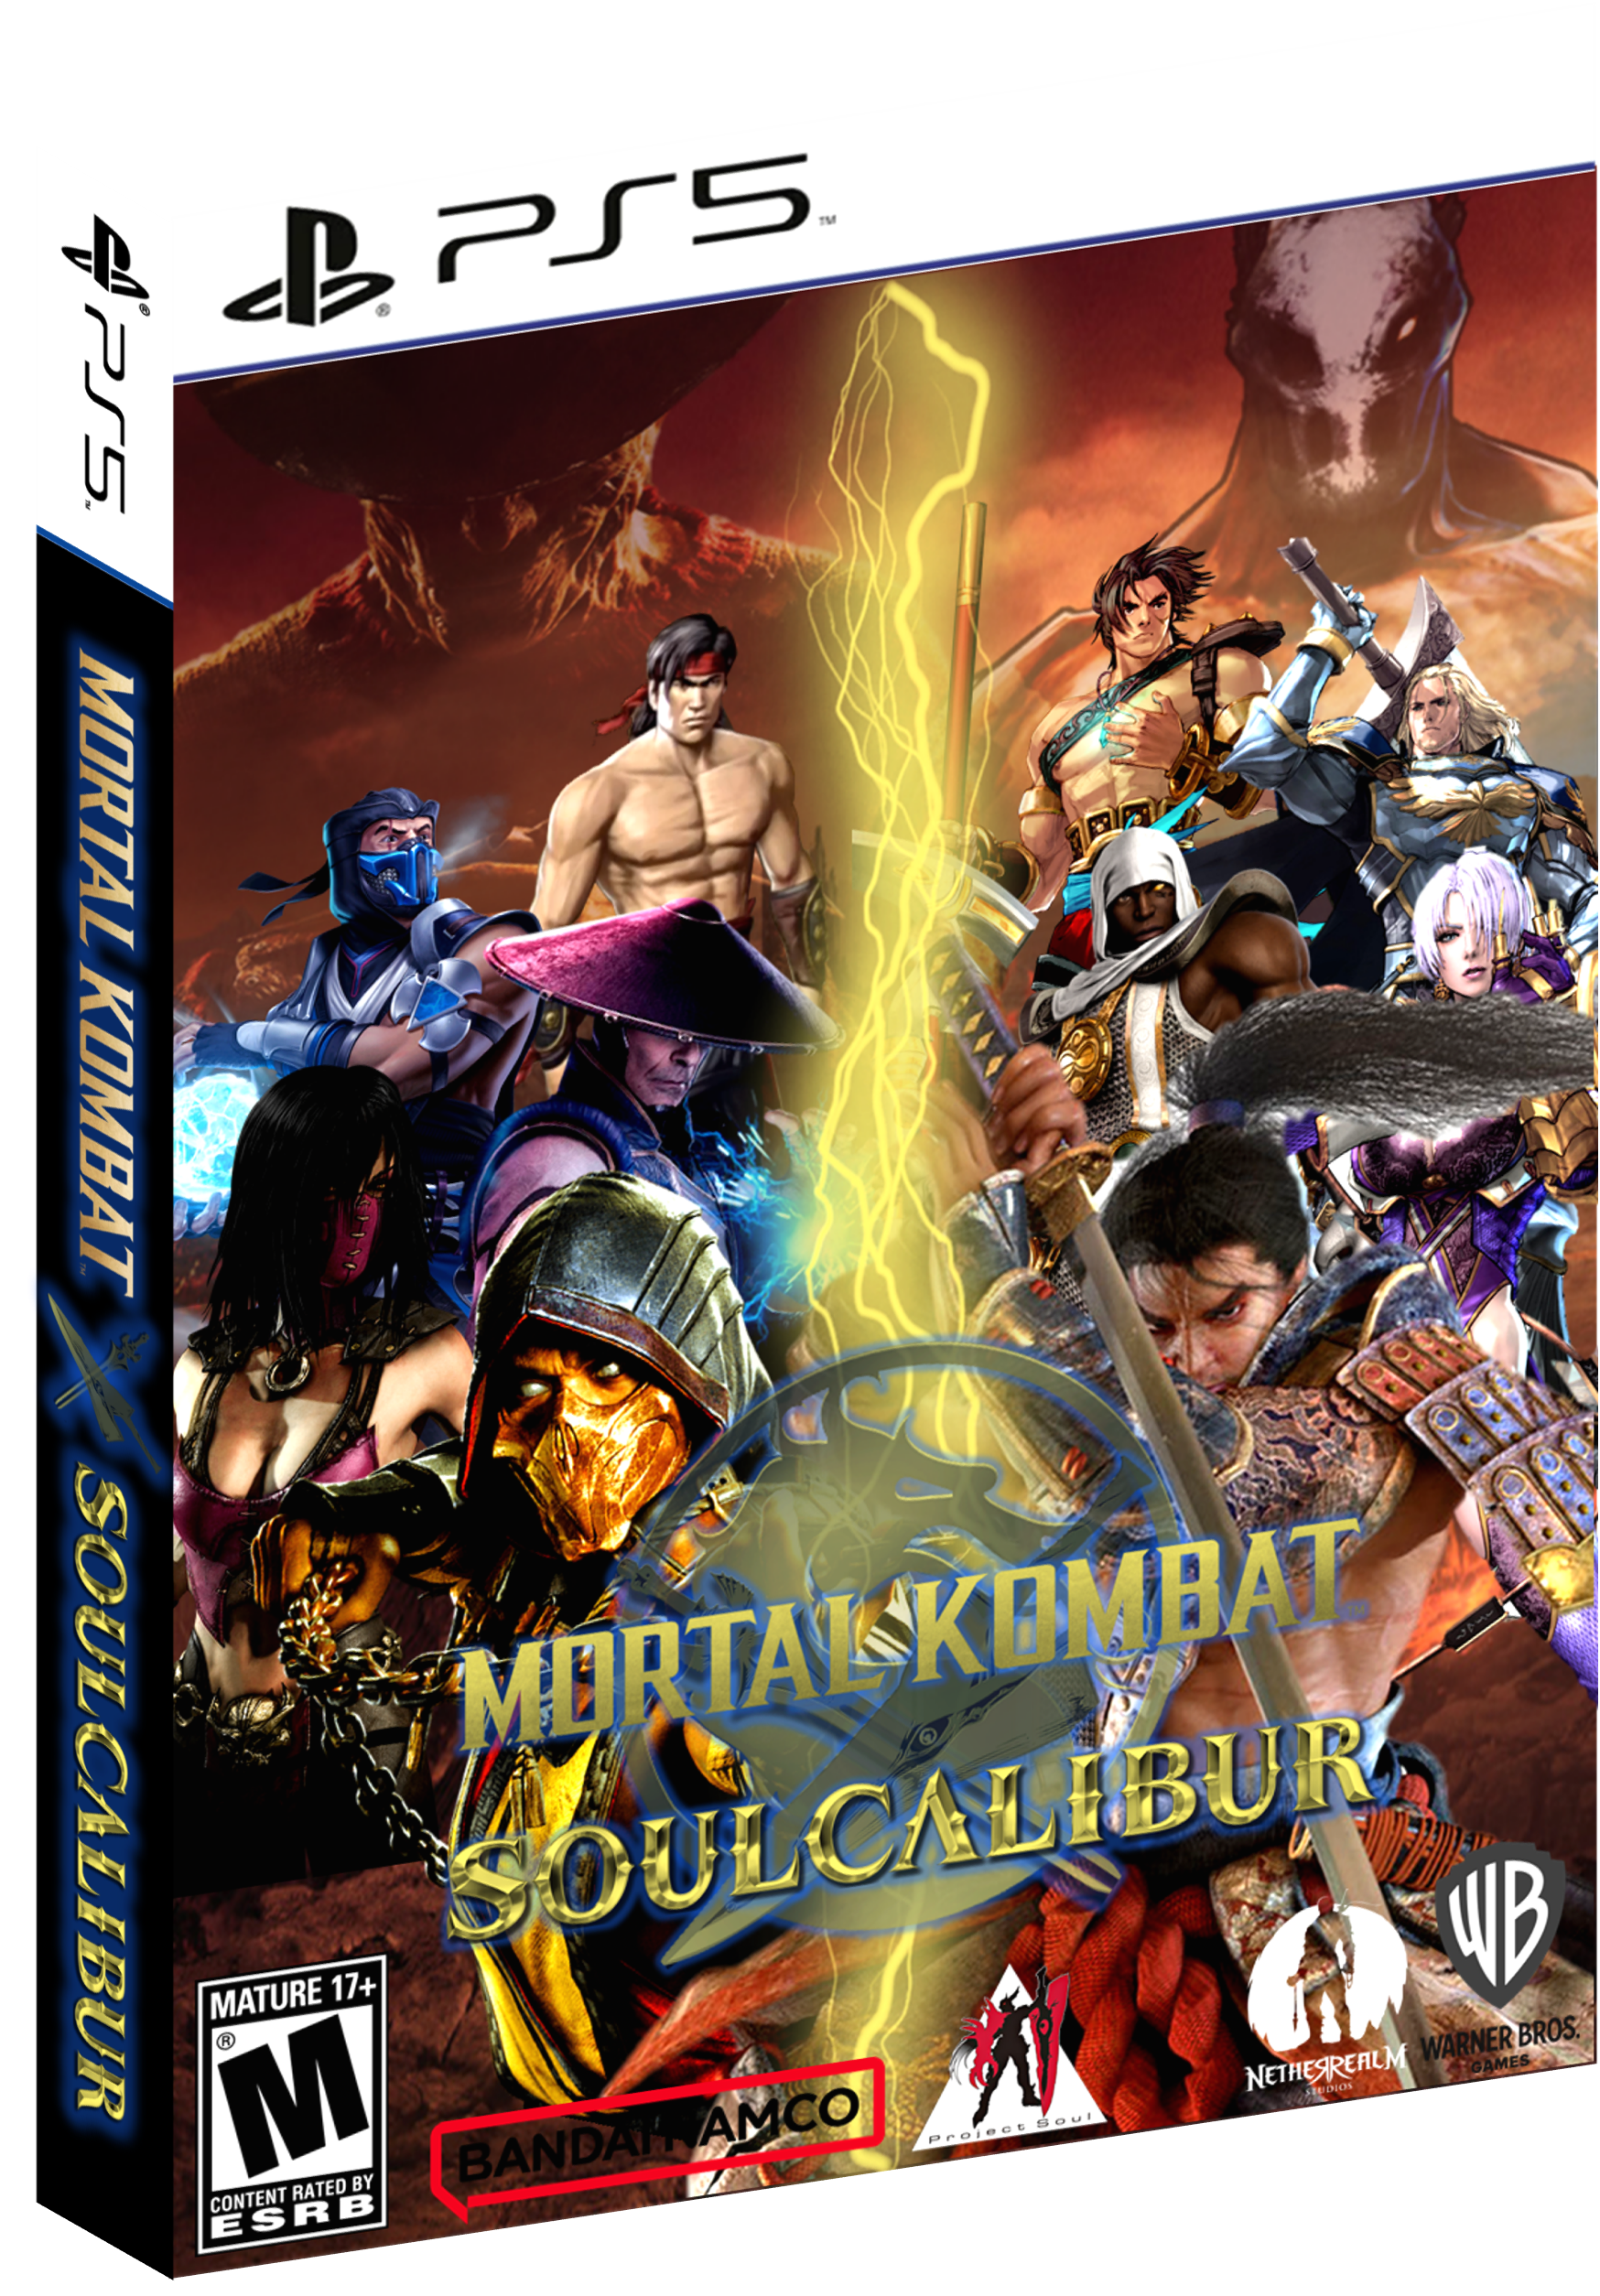 An honest question: Could a Mortal Kombat Vs. Street Fighter